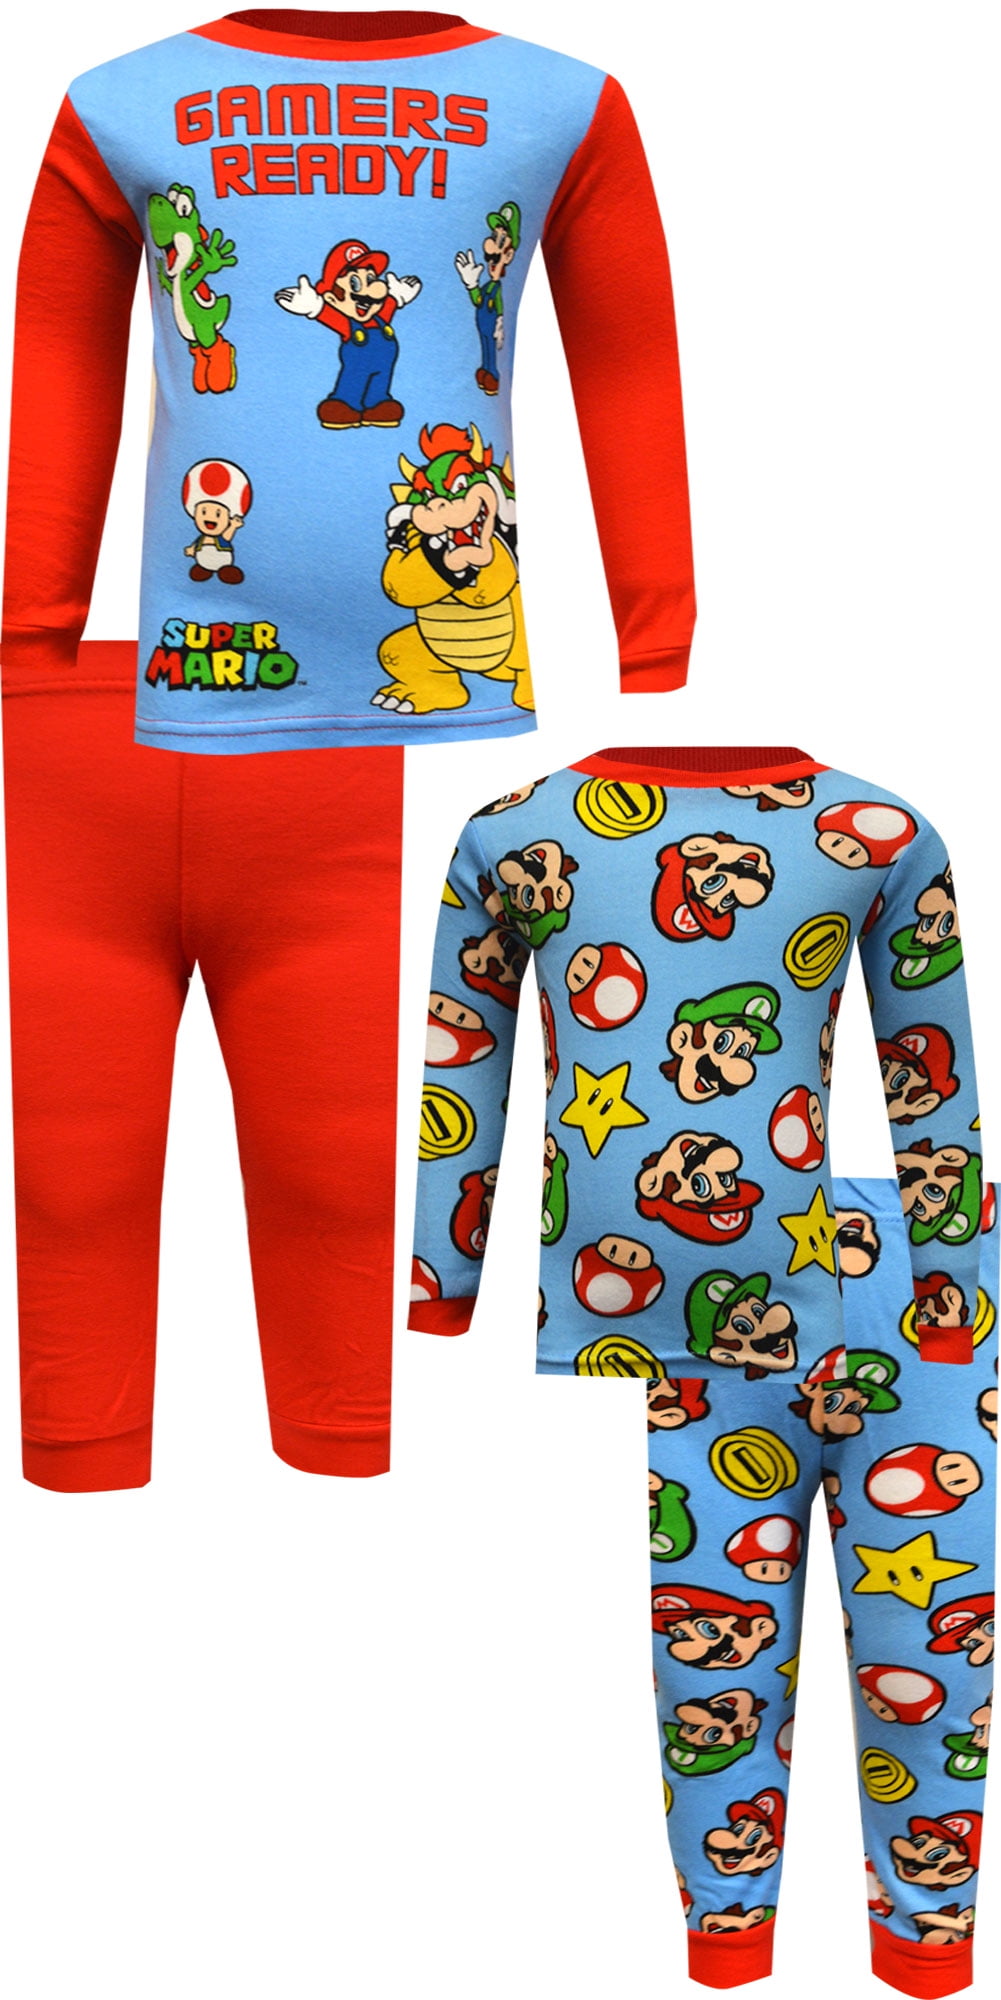 Super Mario Gamers Ready 4 Piece Cotton Pajamas - Walmart.com